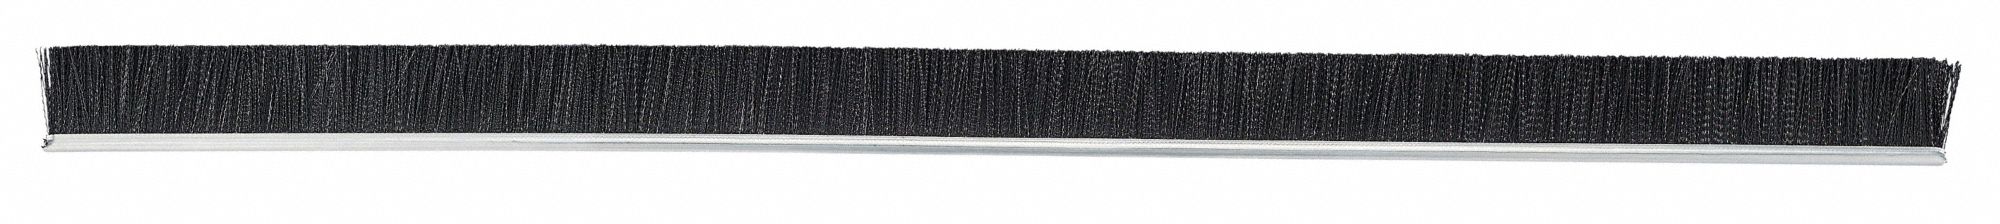 0.020 Bristle Diameter 5/16 Thick 3 Overall Length Black Nylon Bristles Tanis Brush MB700836 Galvanized Backed Strip Brush 3 Trim 